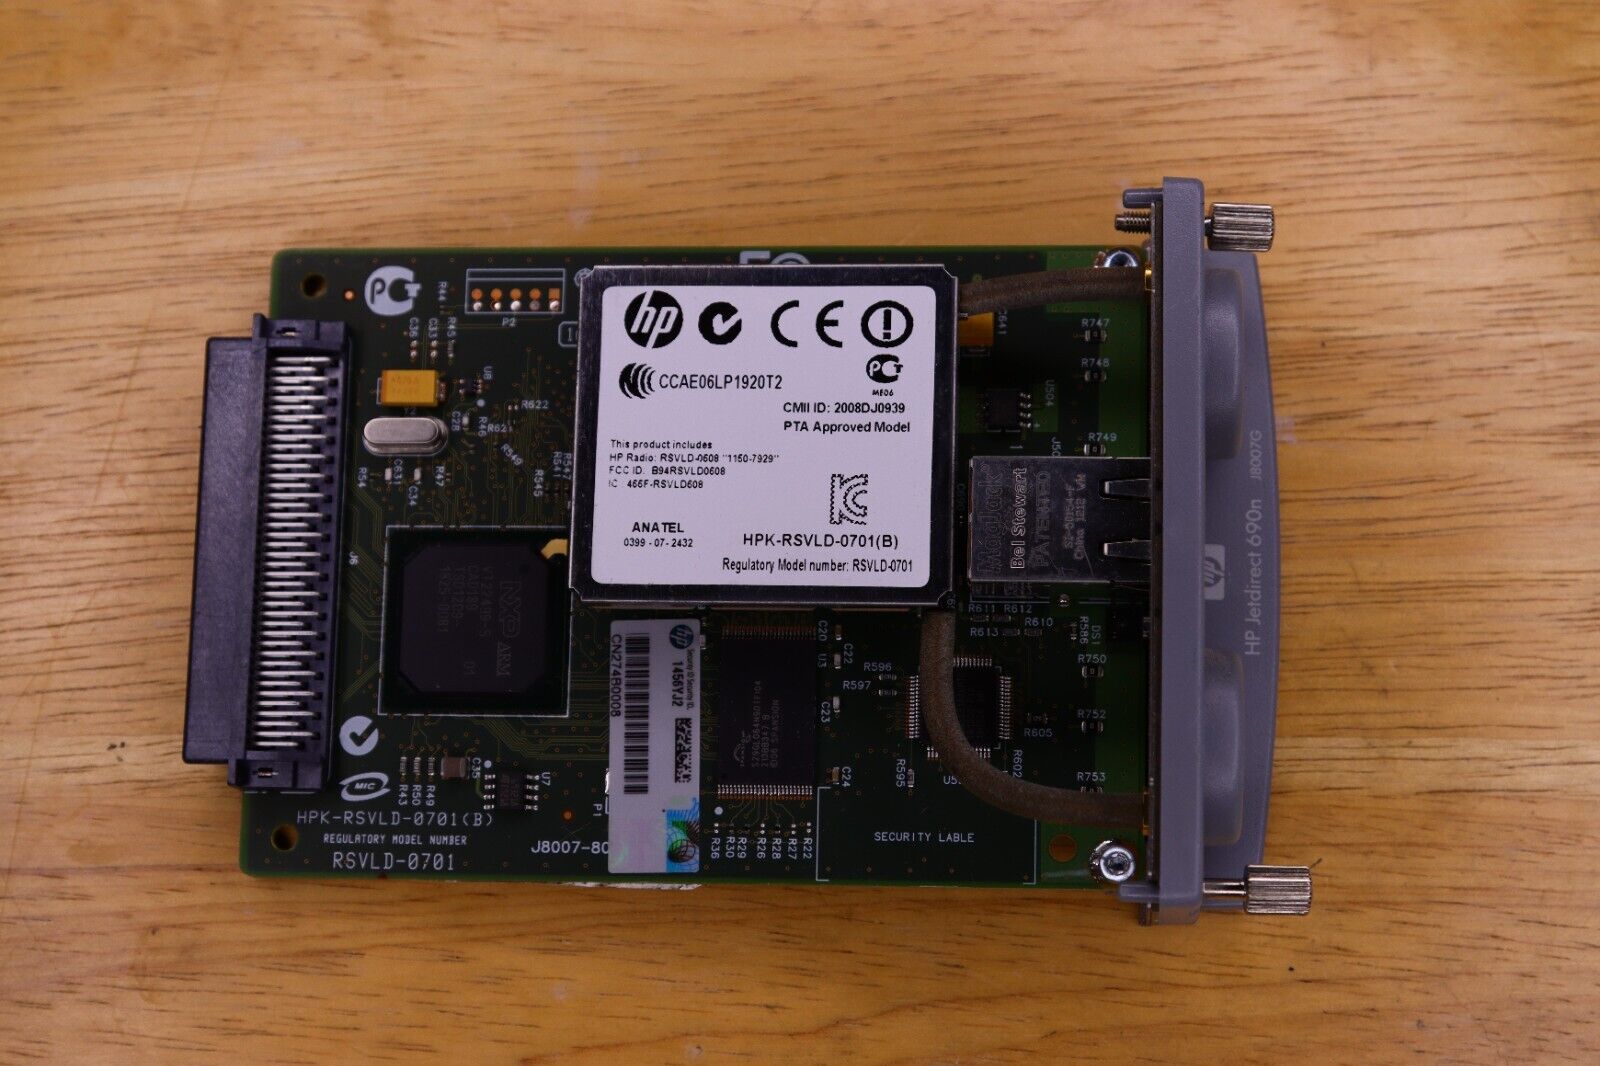 HP Jet Direct J8007G 690N Wireless Network Card J8007-60012 - Tested Good